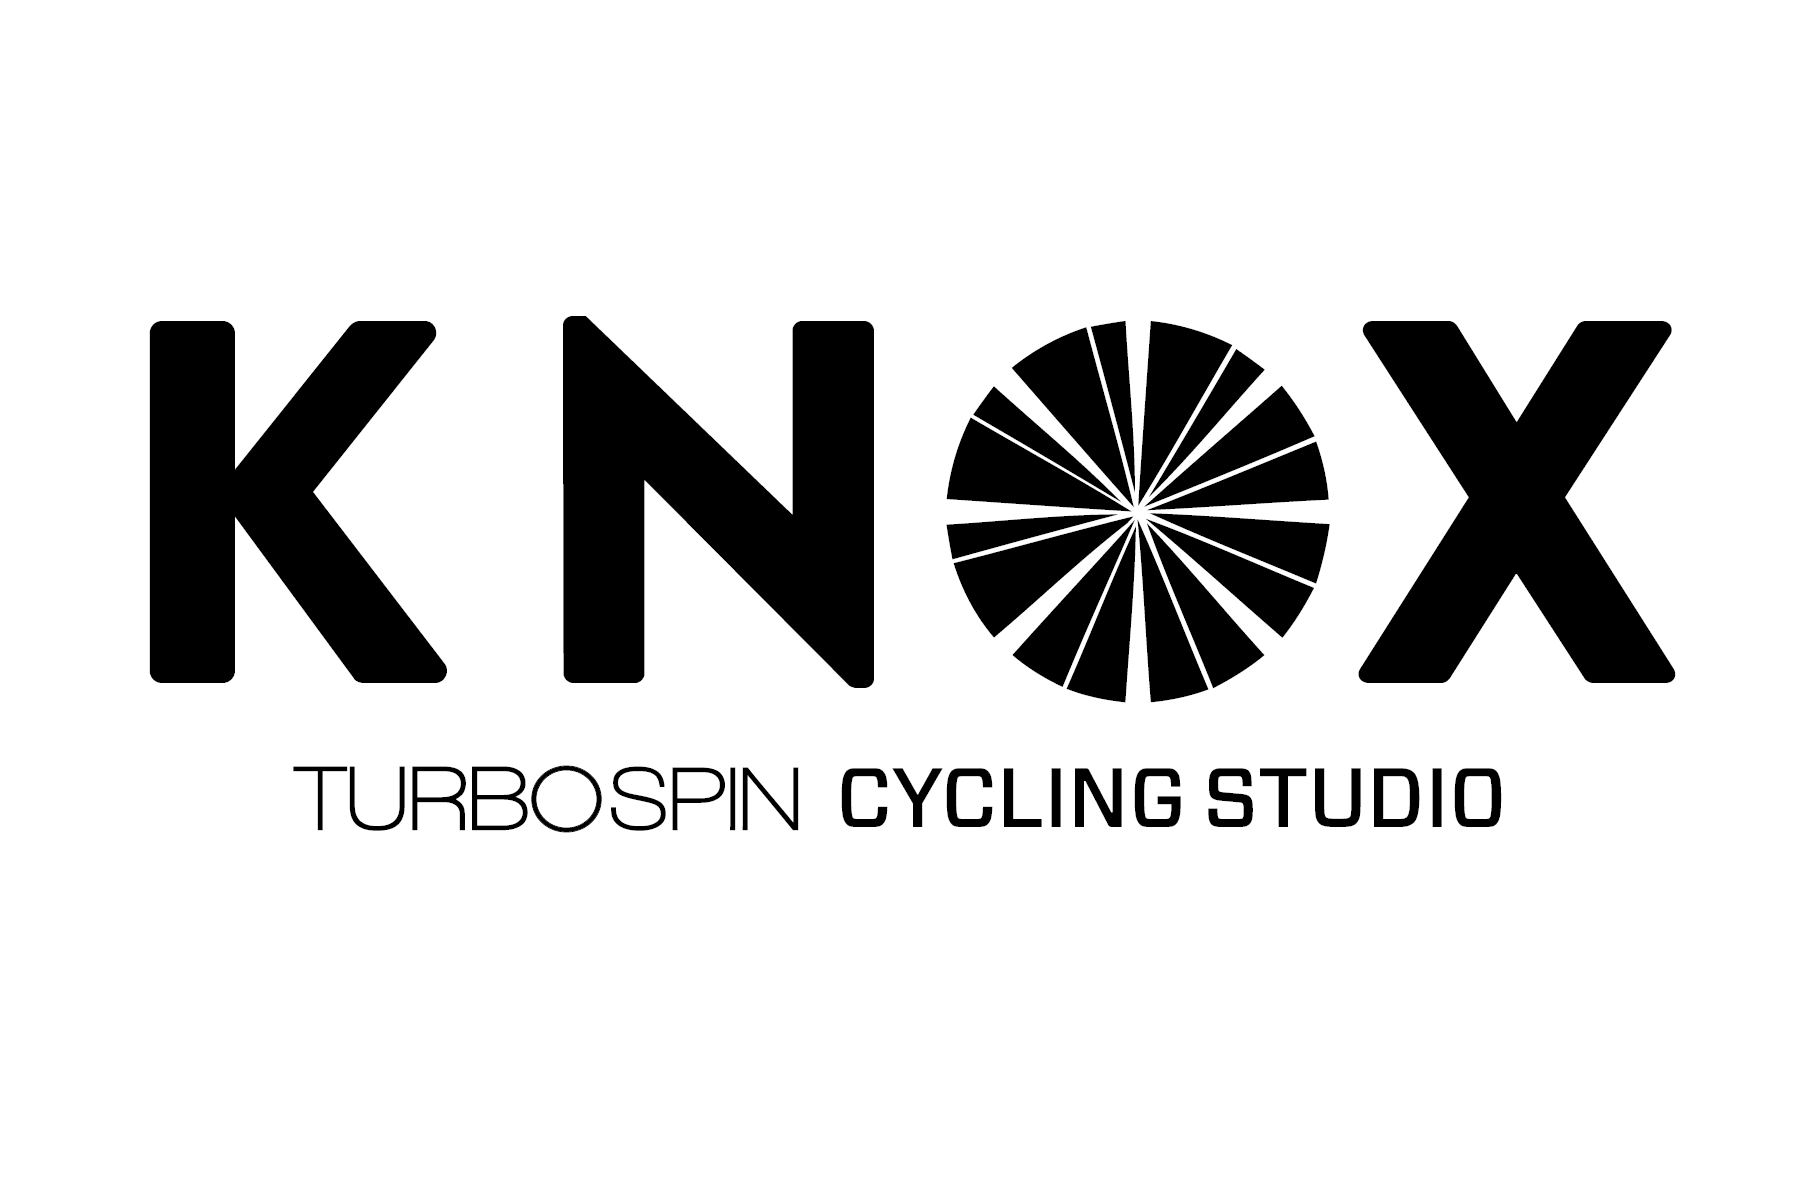 TurboSpin Cycling Studio